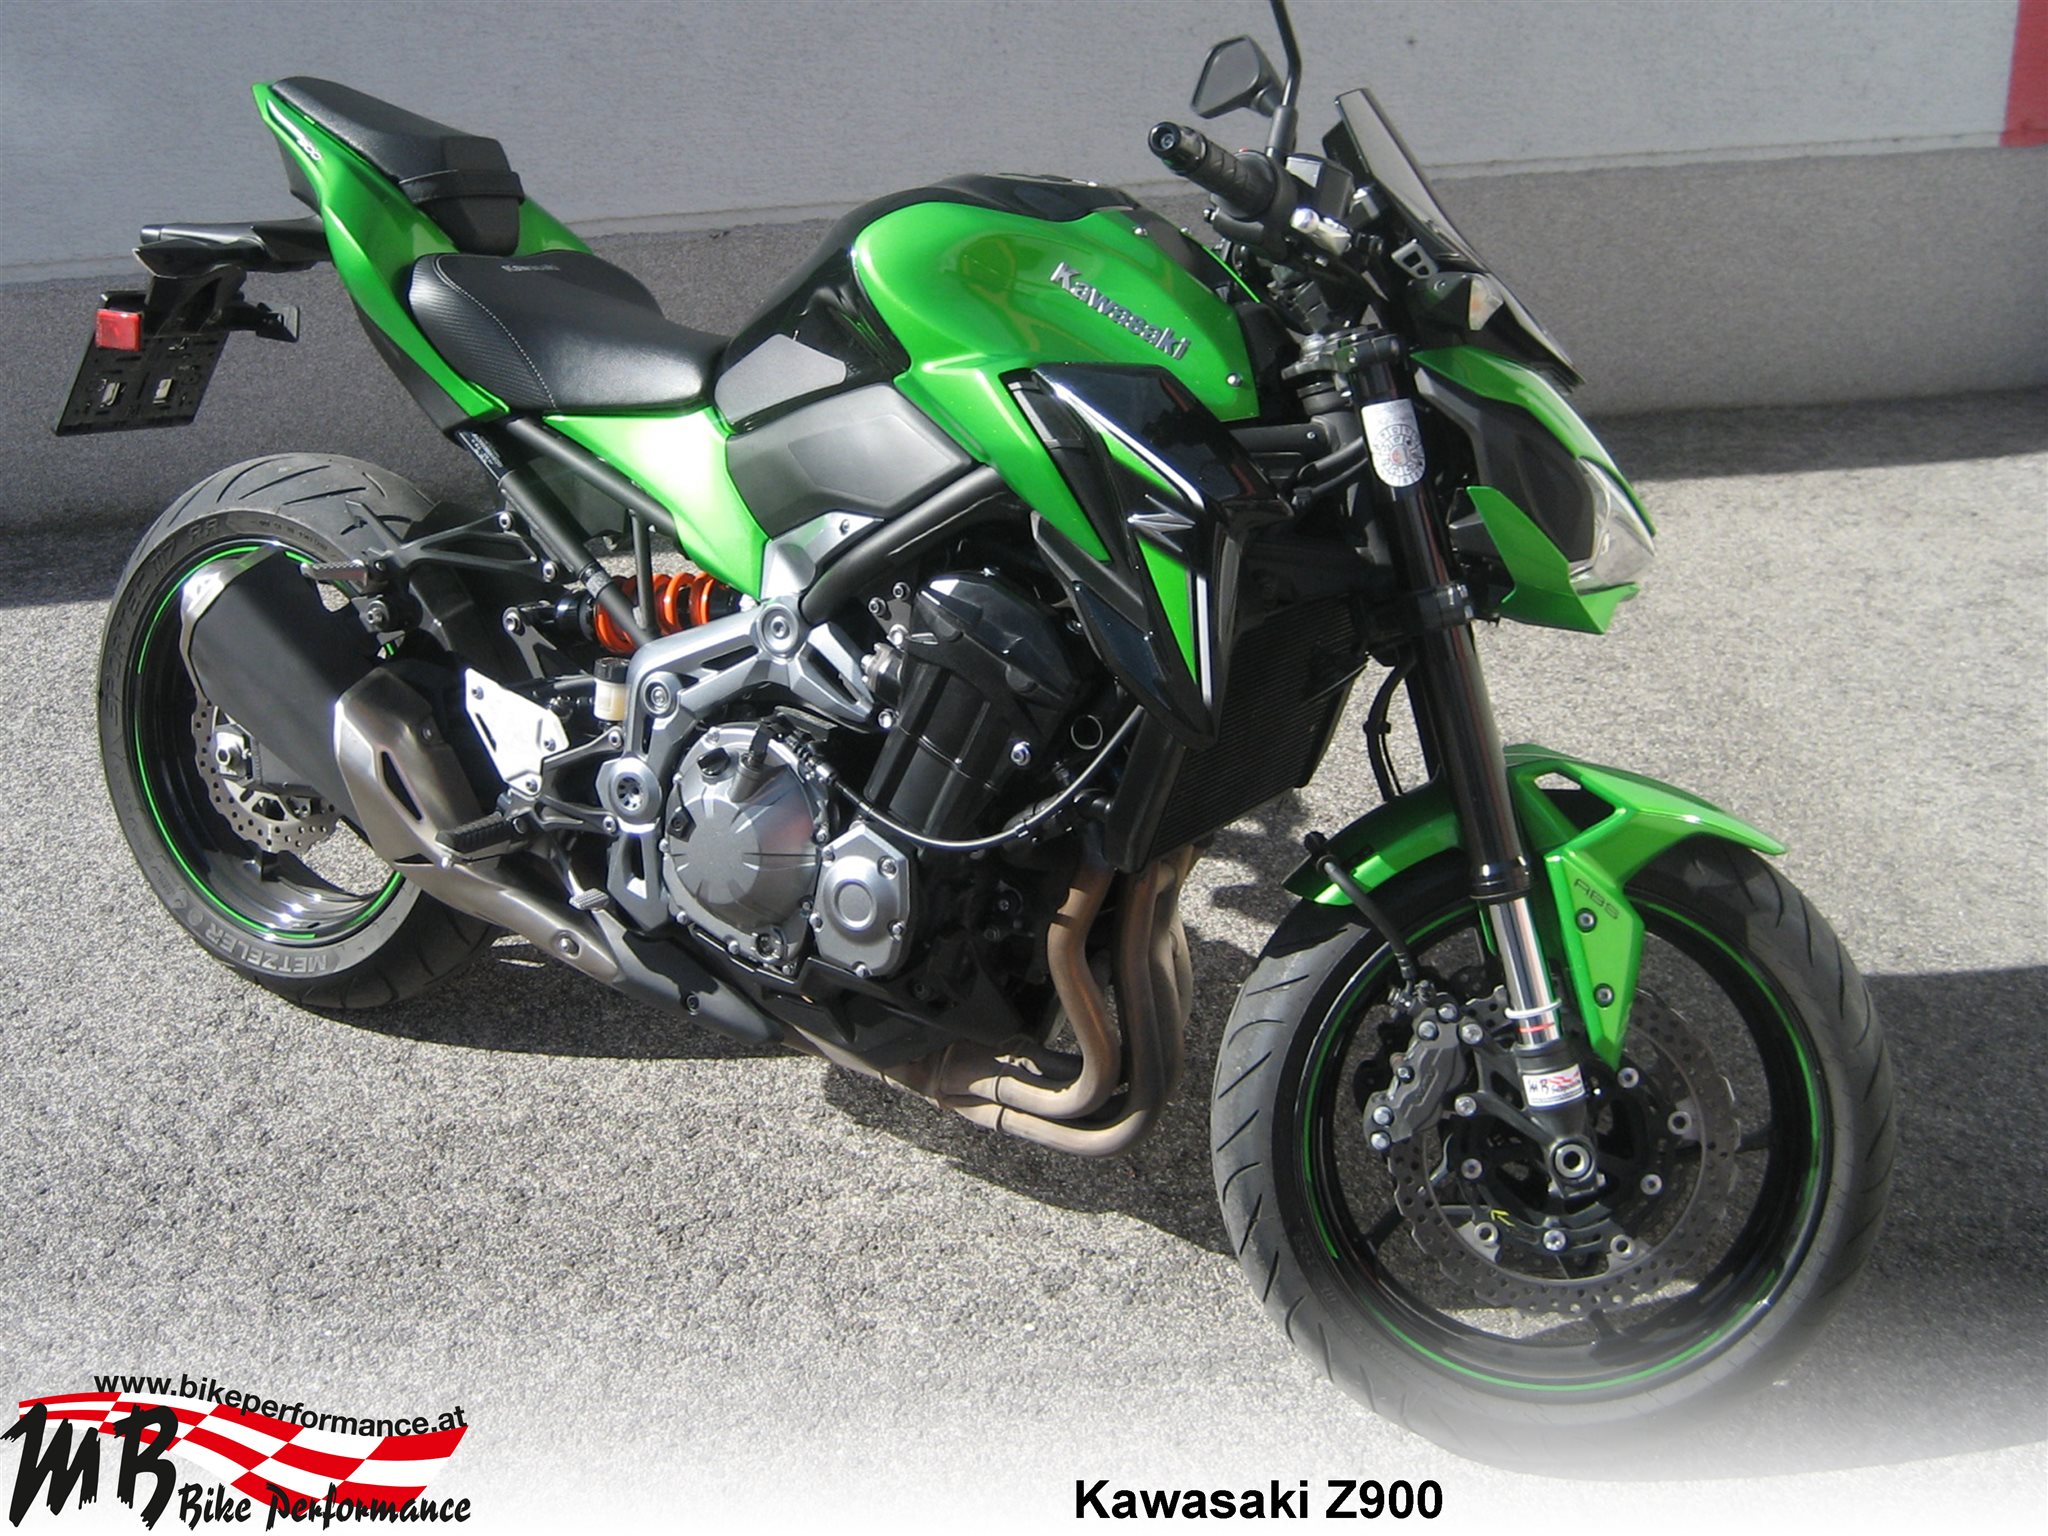 Details zum Custom-Bike Kawasaki Z900 des Händlers MB Bike